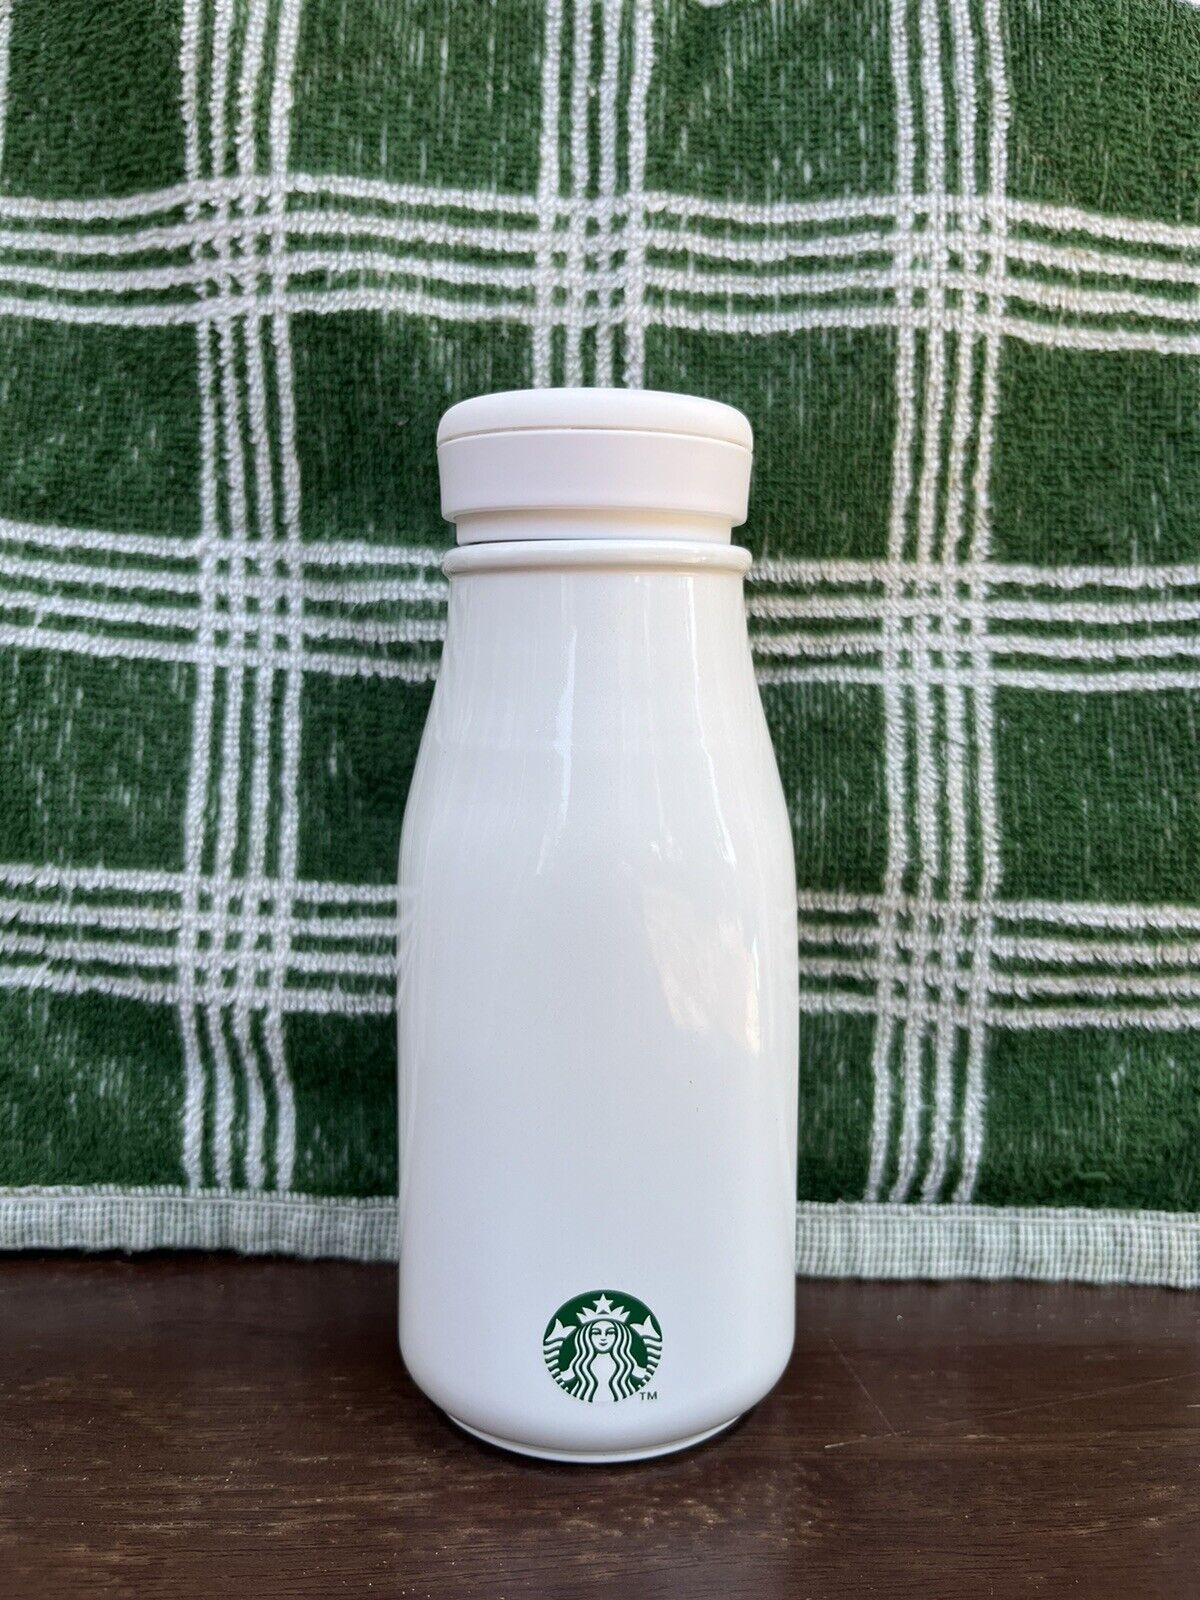 Genuine Starbucks Japanese milk / cream container 8 fl. oz / 237 ml.